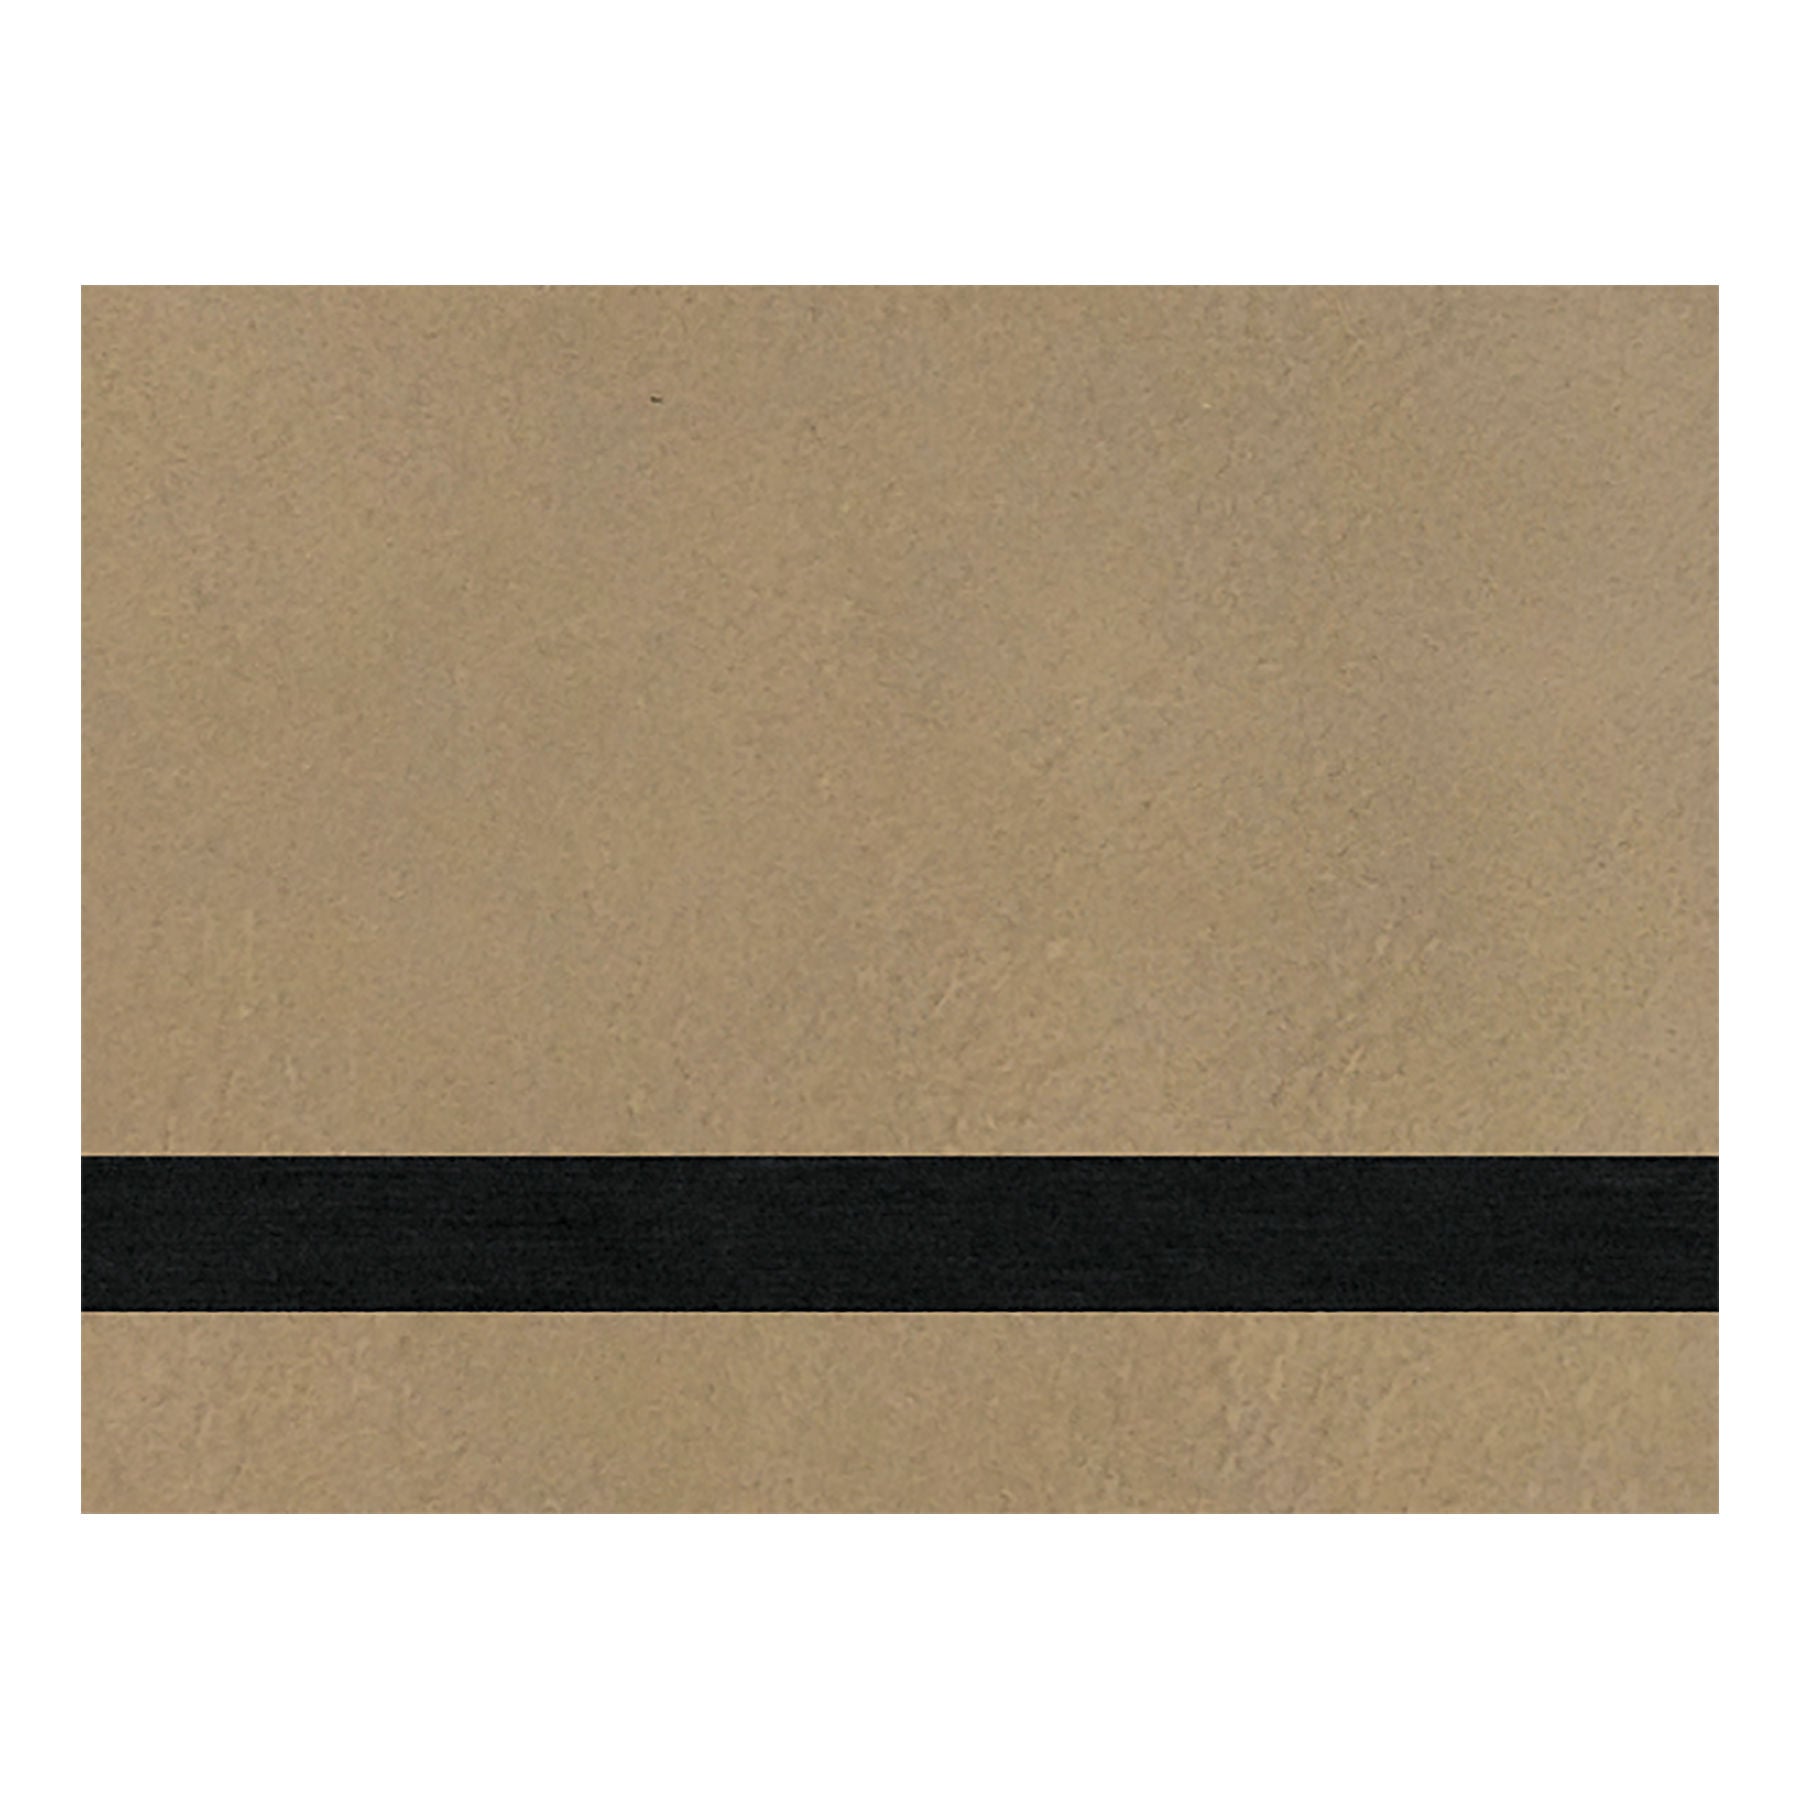 Custom Square Leatherette Patches – Black Birch Customs